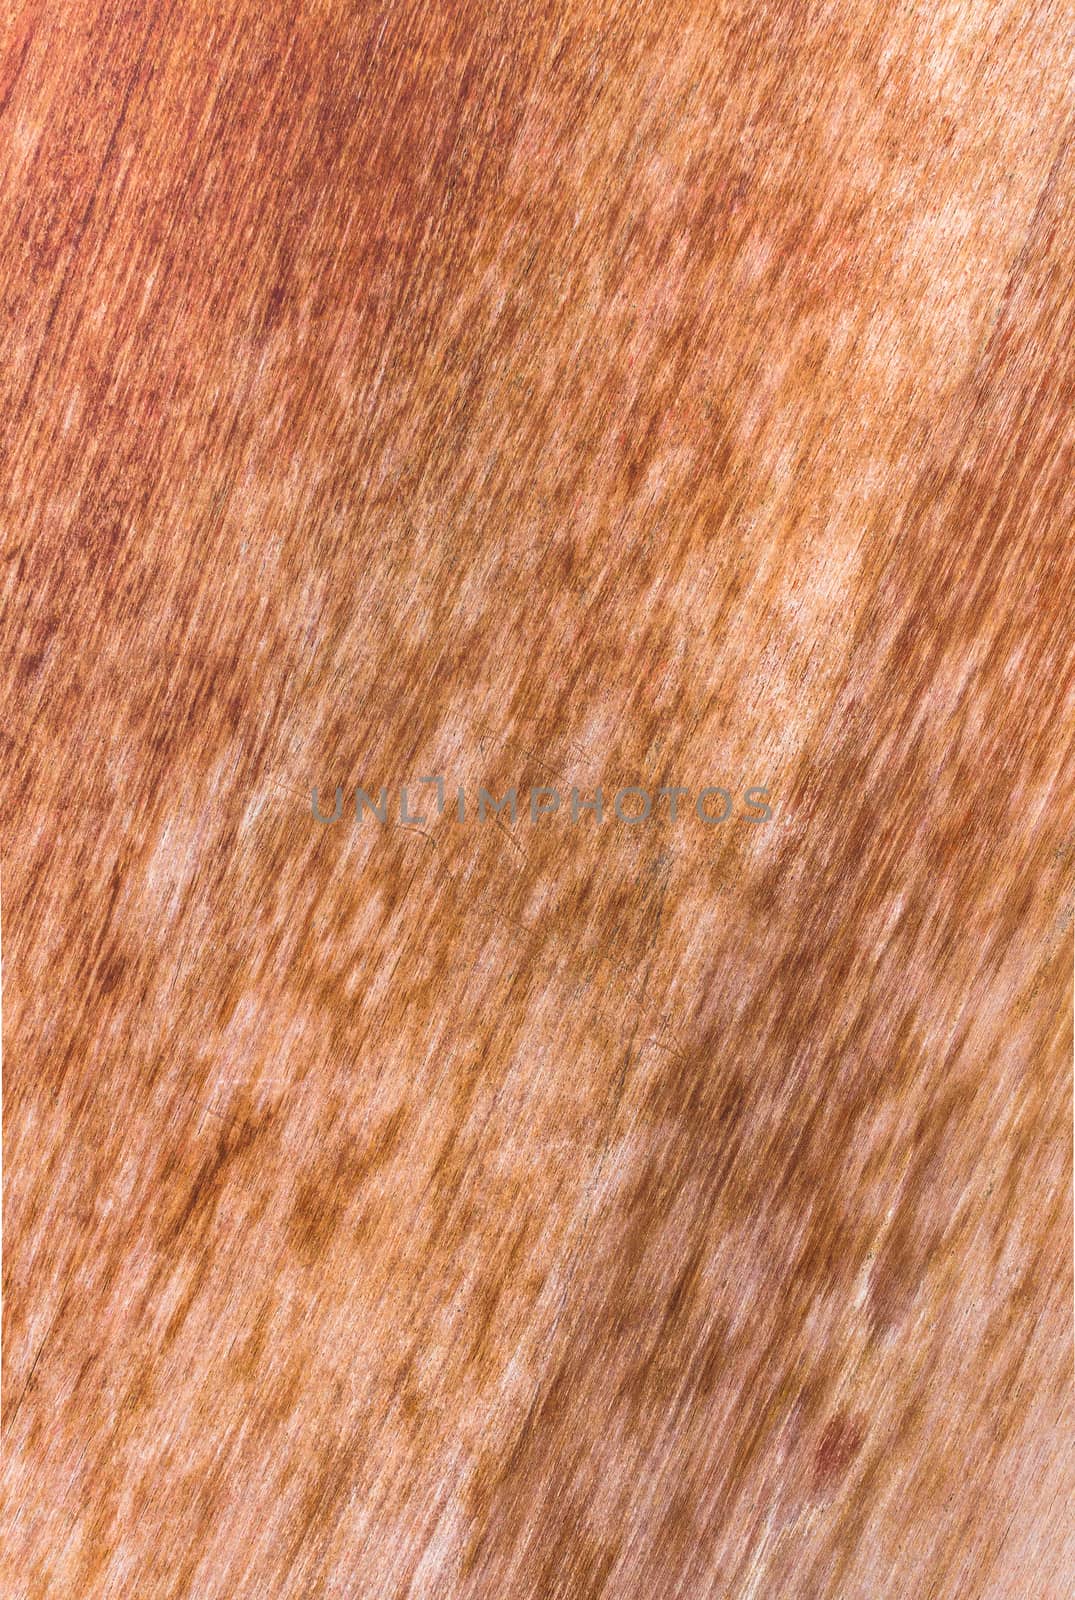 Hight resolution natural woodgrain texture background .